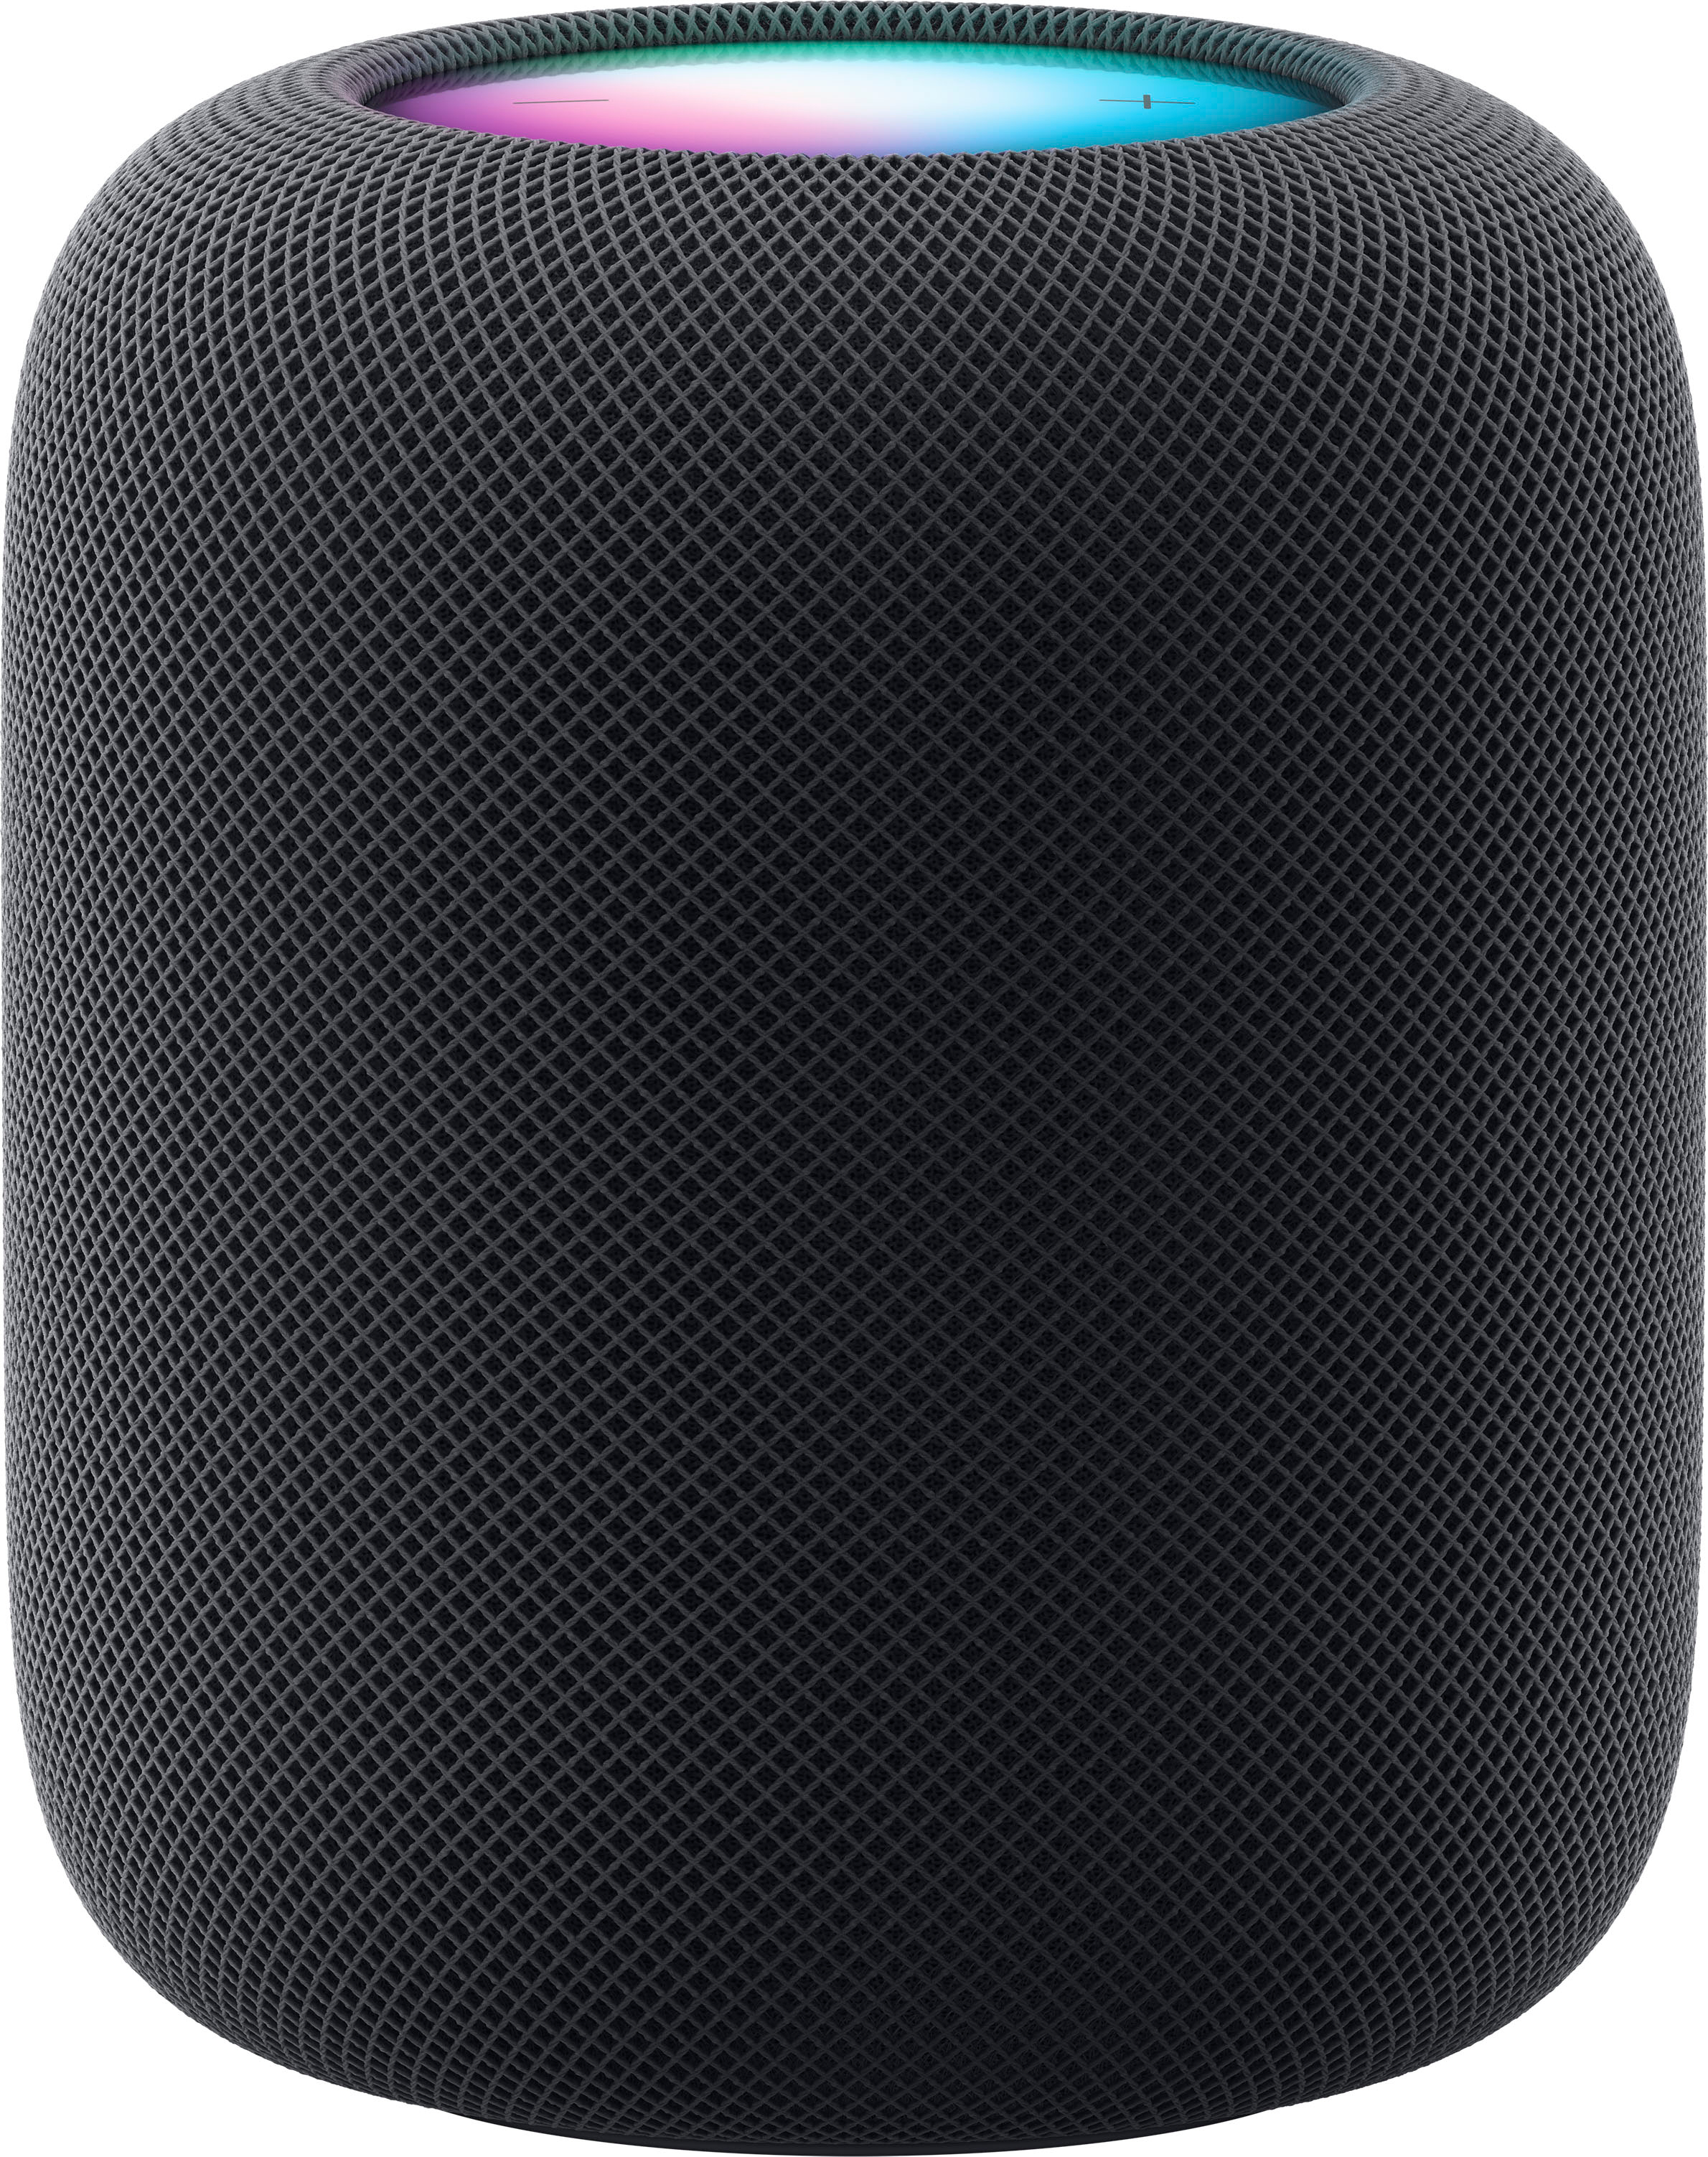 Buy Siri Apple (2nd Smart with MQJ73LL/A HomePod Generation) - Speaker Midnight Best